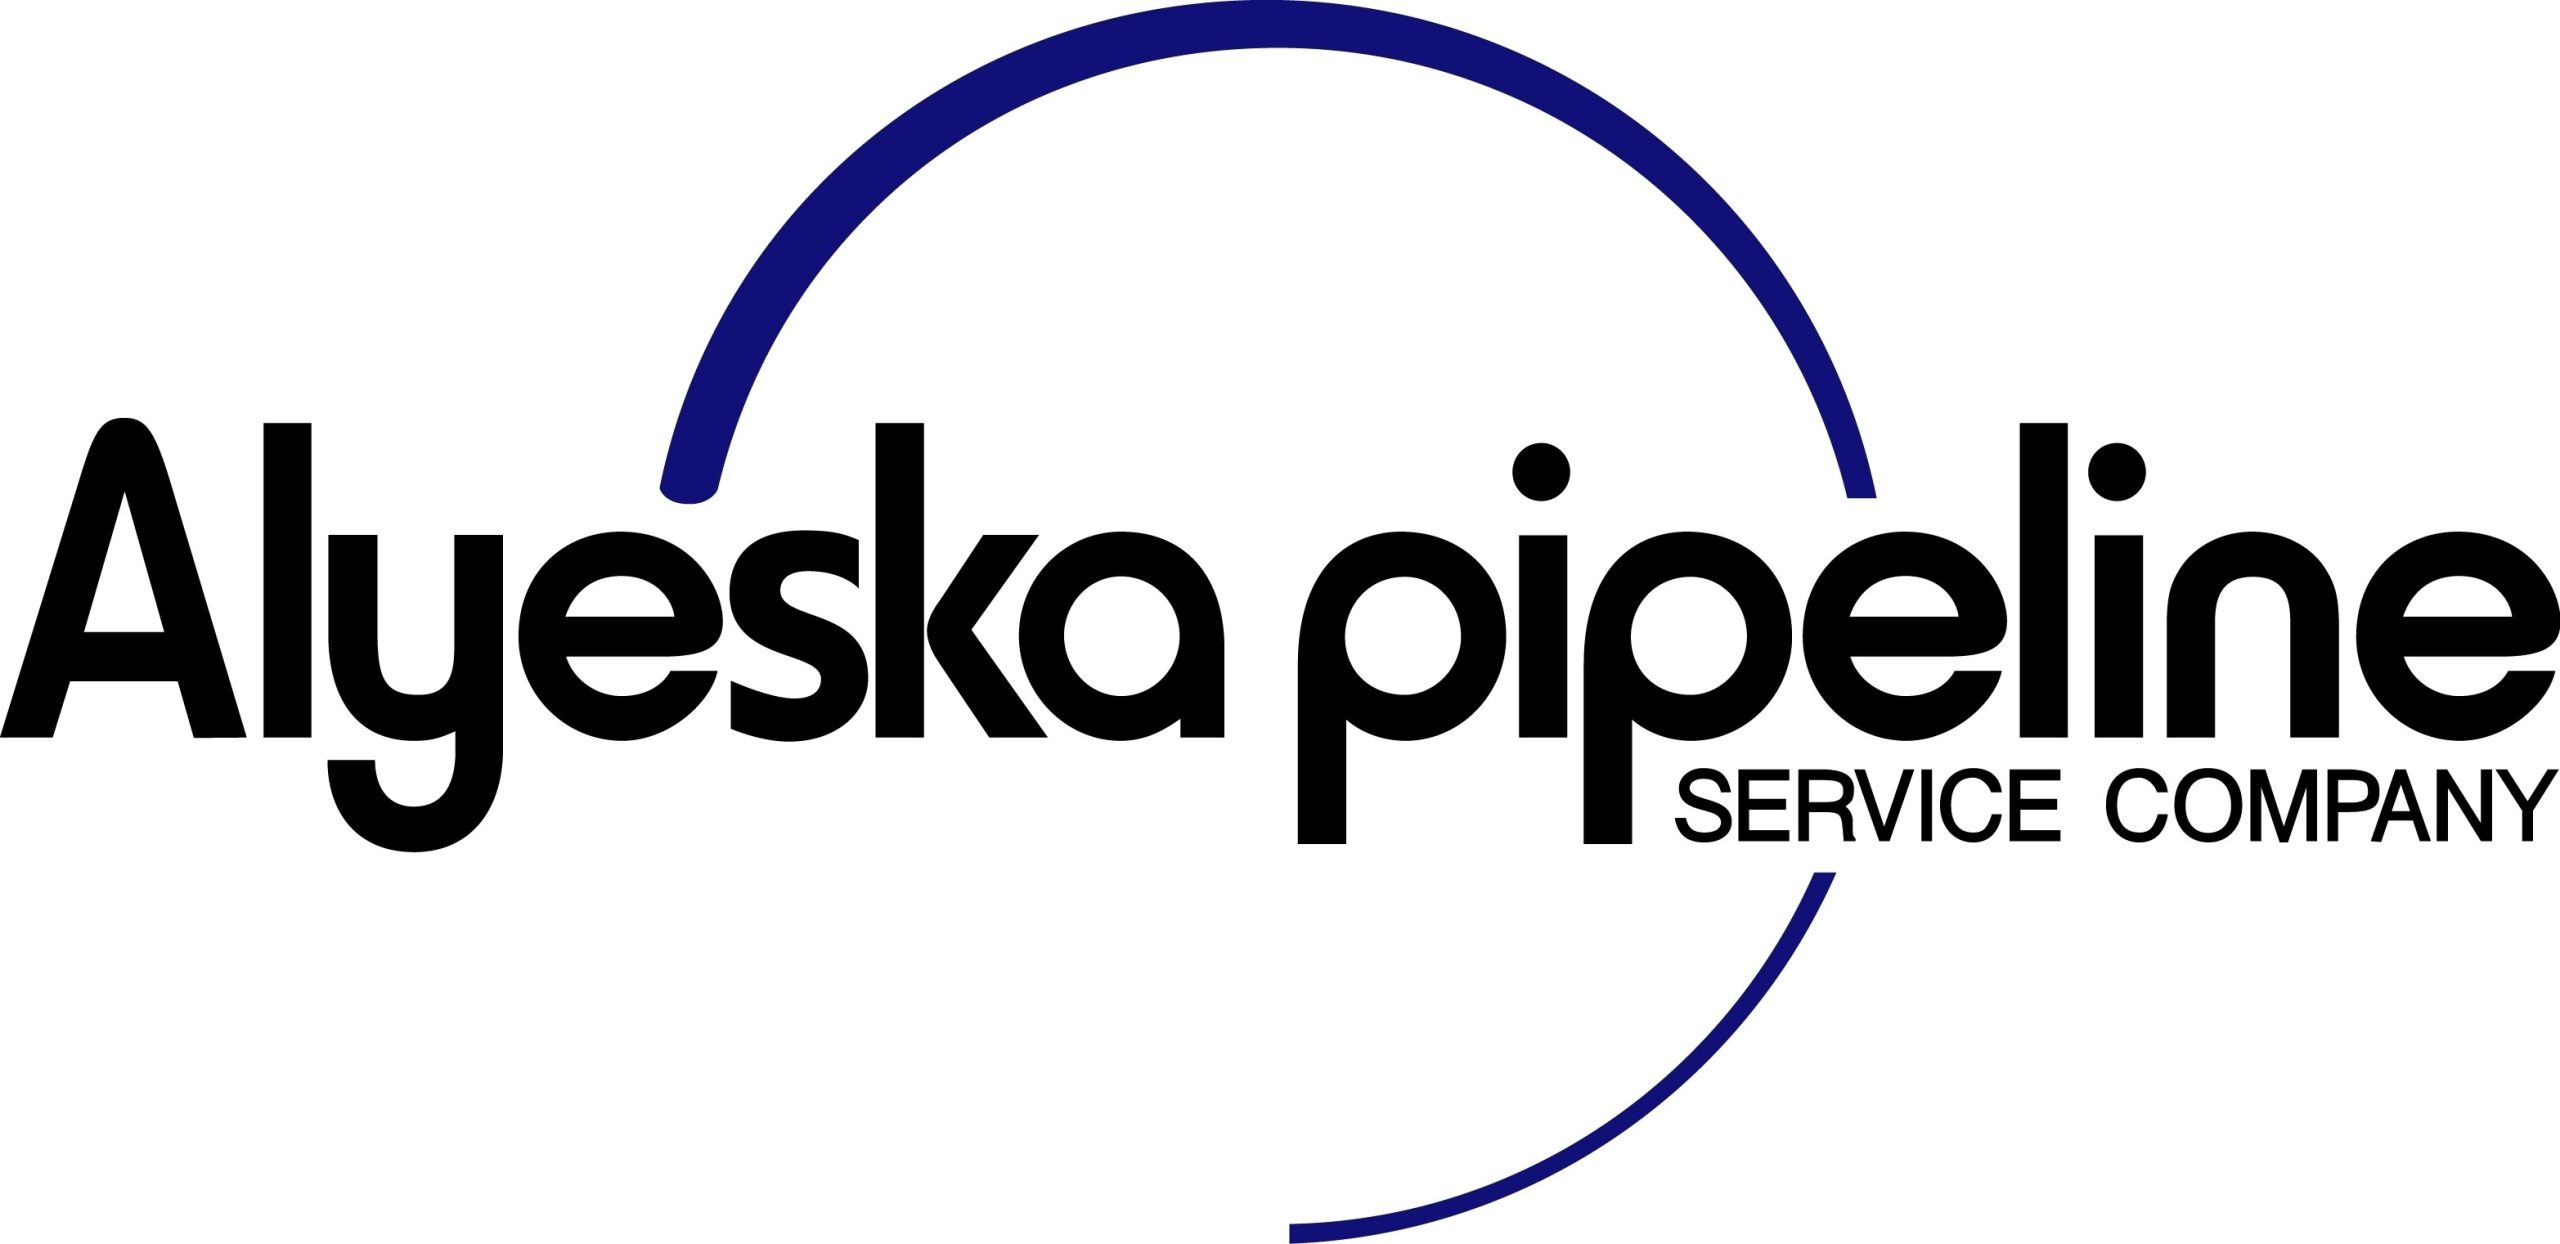 Alyeska Pipeline Service Company logo